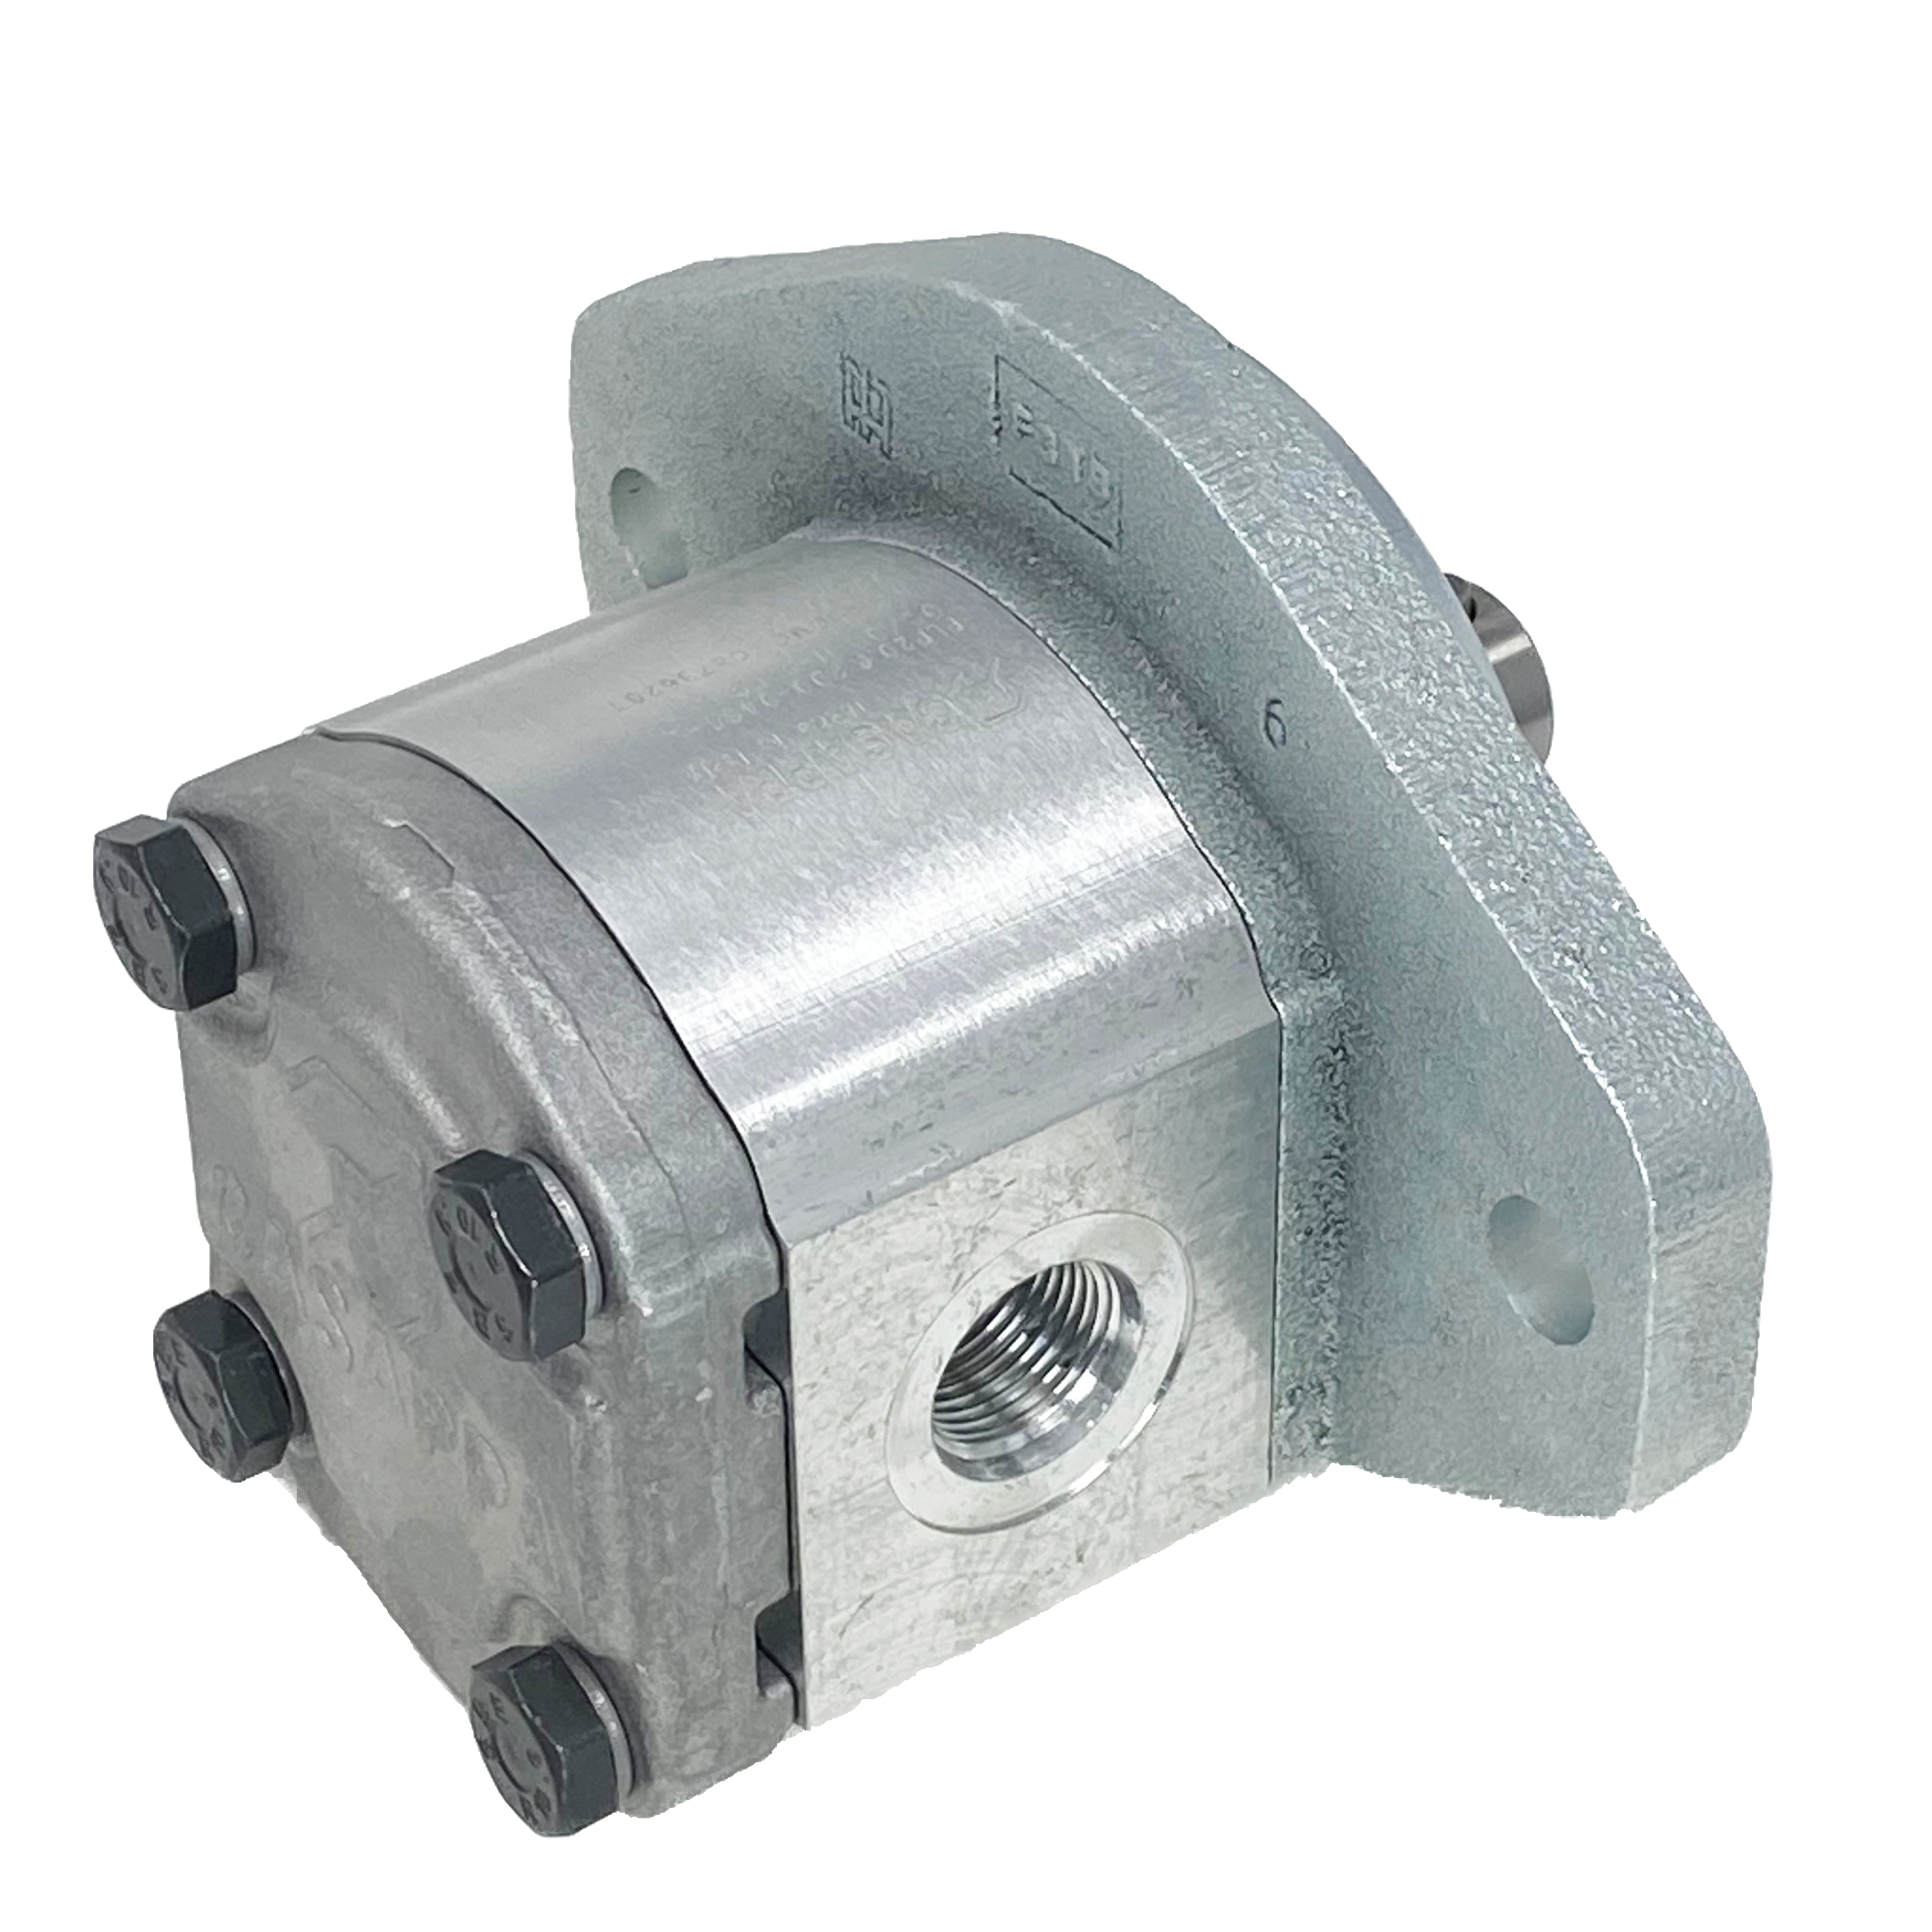 PLM20.9B0-31S1-LOC/OC-N-EL : Casappa Polaris Gear Motor, 9.17cc, 3625psi Rated, 3500RPM, Reversible Interior Drain, 5/8" Bore x 5/32" Key Shaft, SAE A 2-Bolt Flange, 0.625 (5/8") #10 SAE Inlet, 0.625 (5/8") #10 SAE Outlet, Aluminum Body & Flange